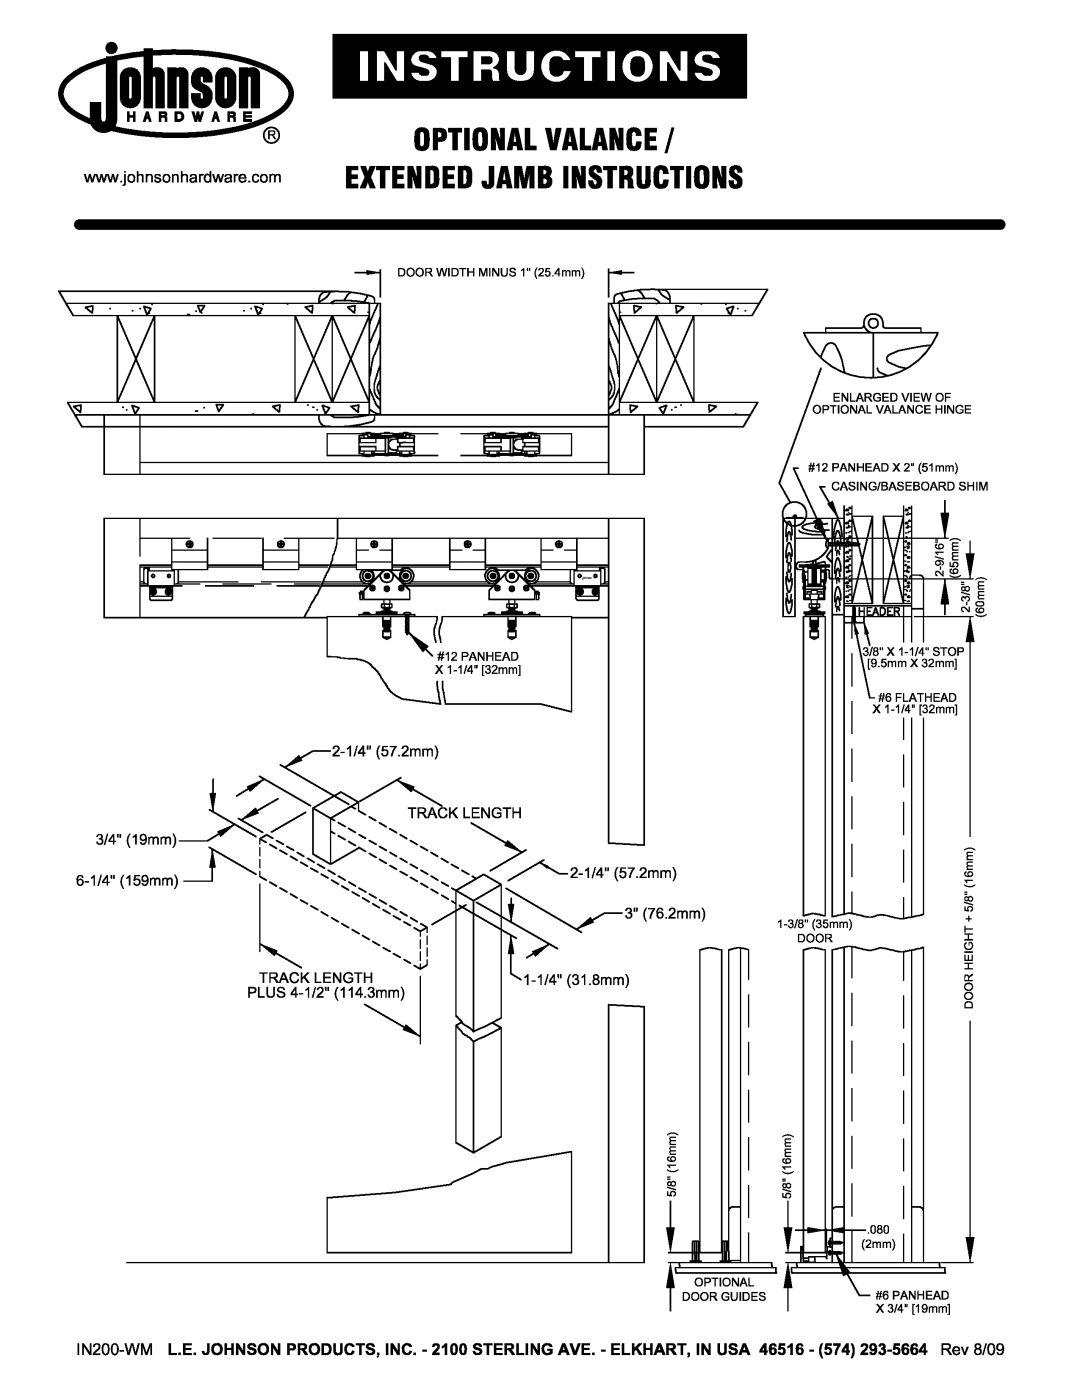 Johnson Hardware 200WM Series manual 